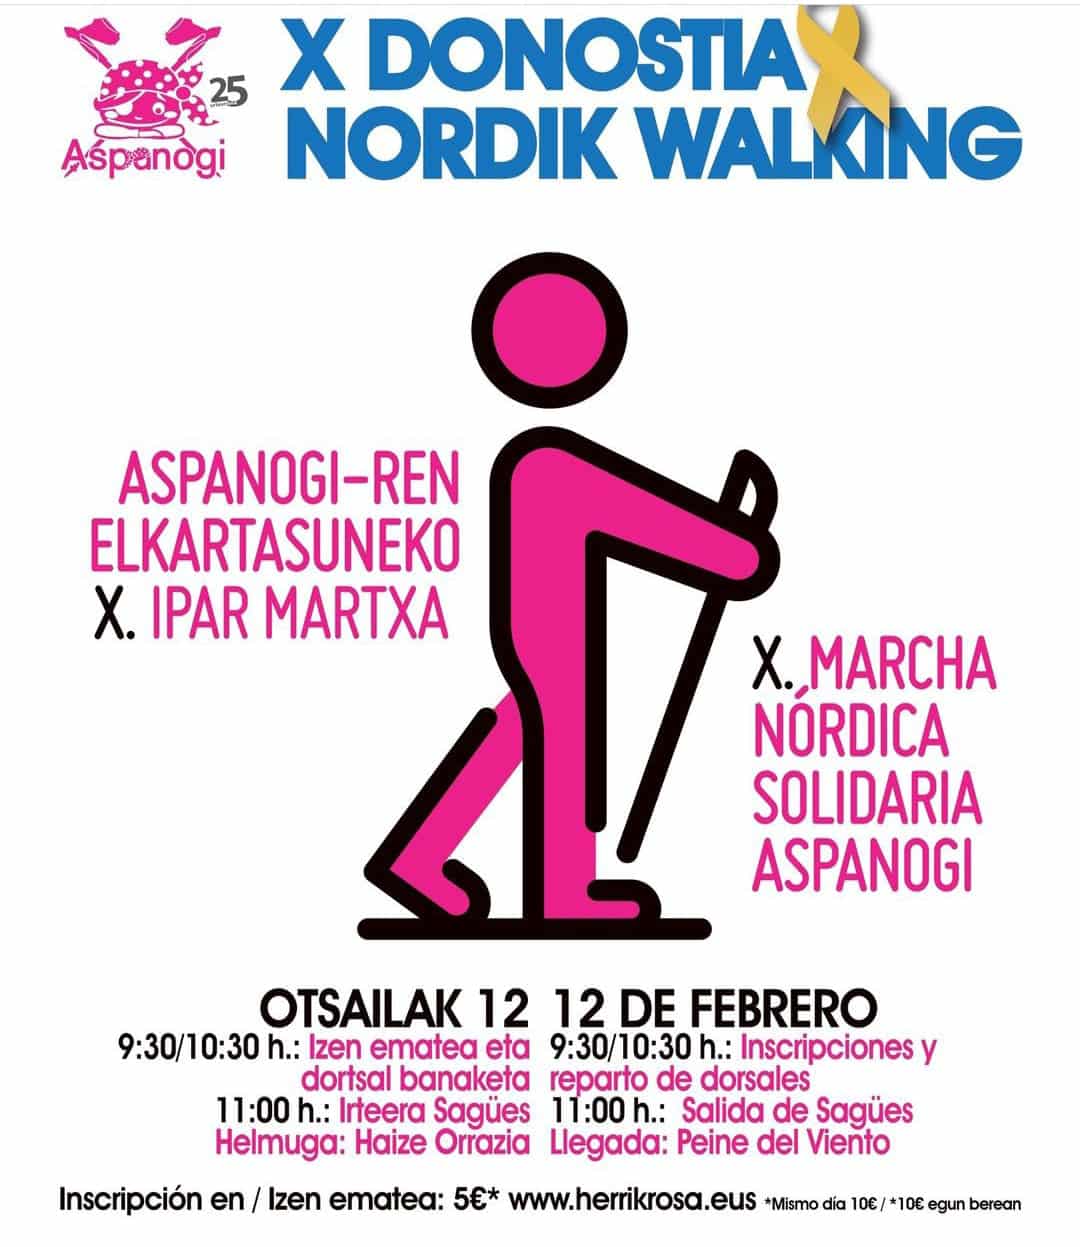 aspa - ASPANOGI anima a caminar 6 kilómetros contra el cáncer infantil este domingo en Donostia